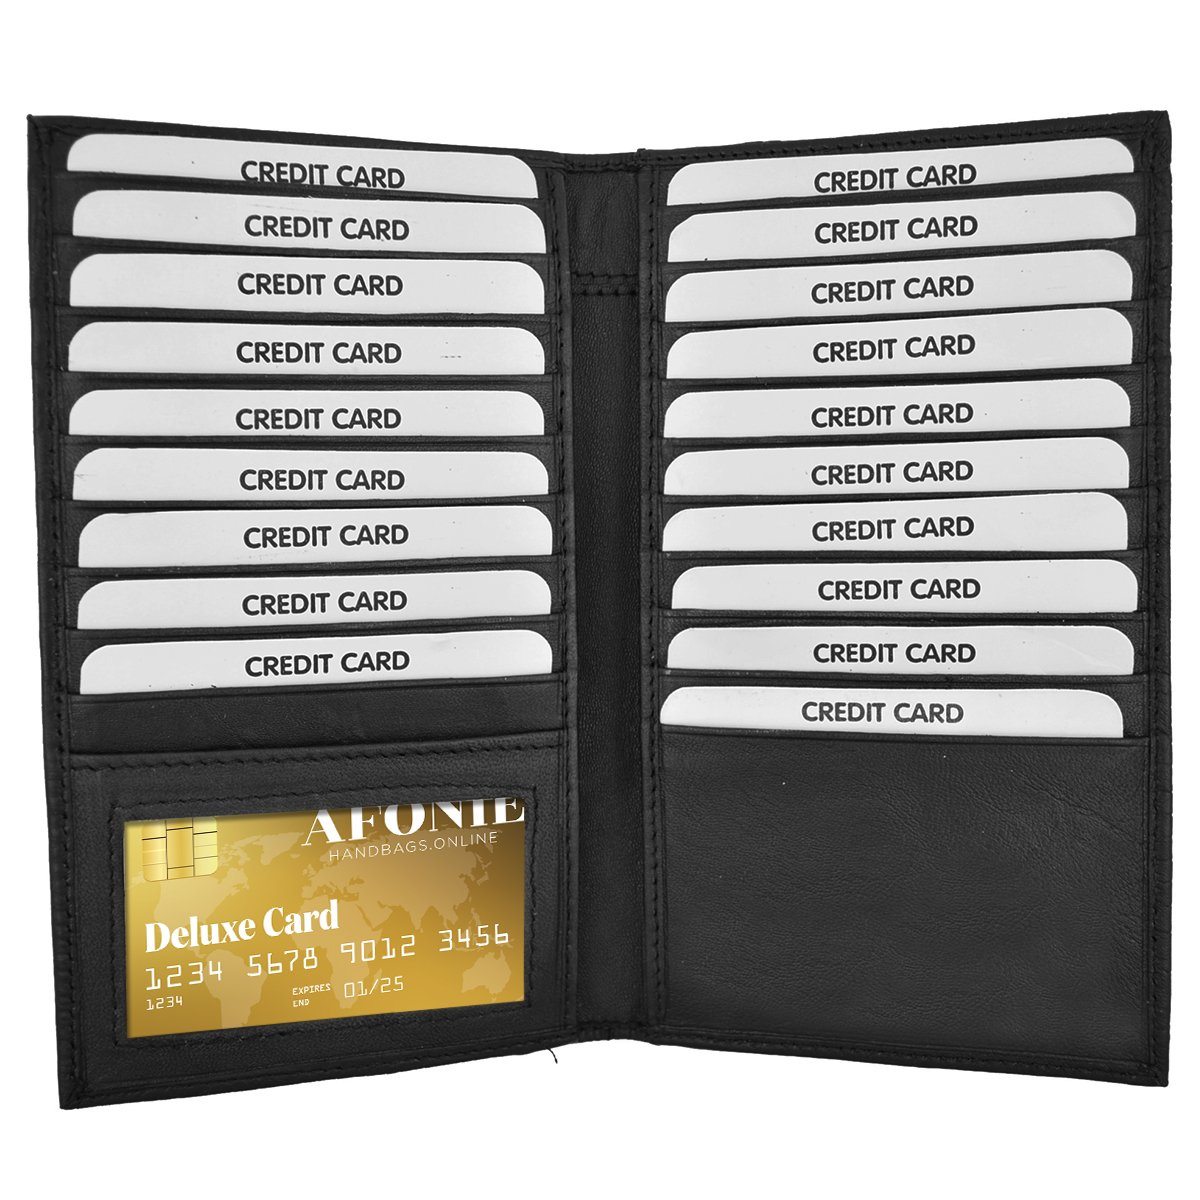 RFID Croco Cradit Cards Holder